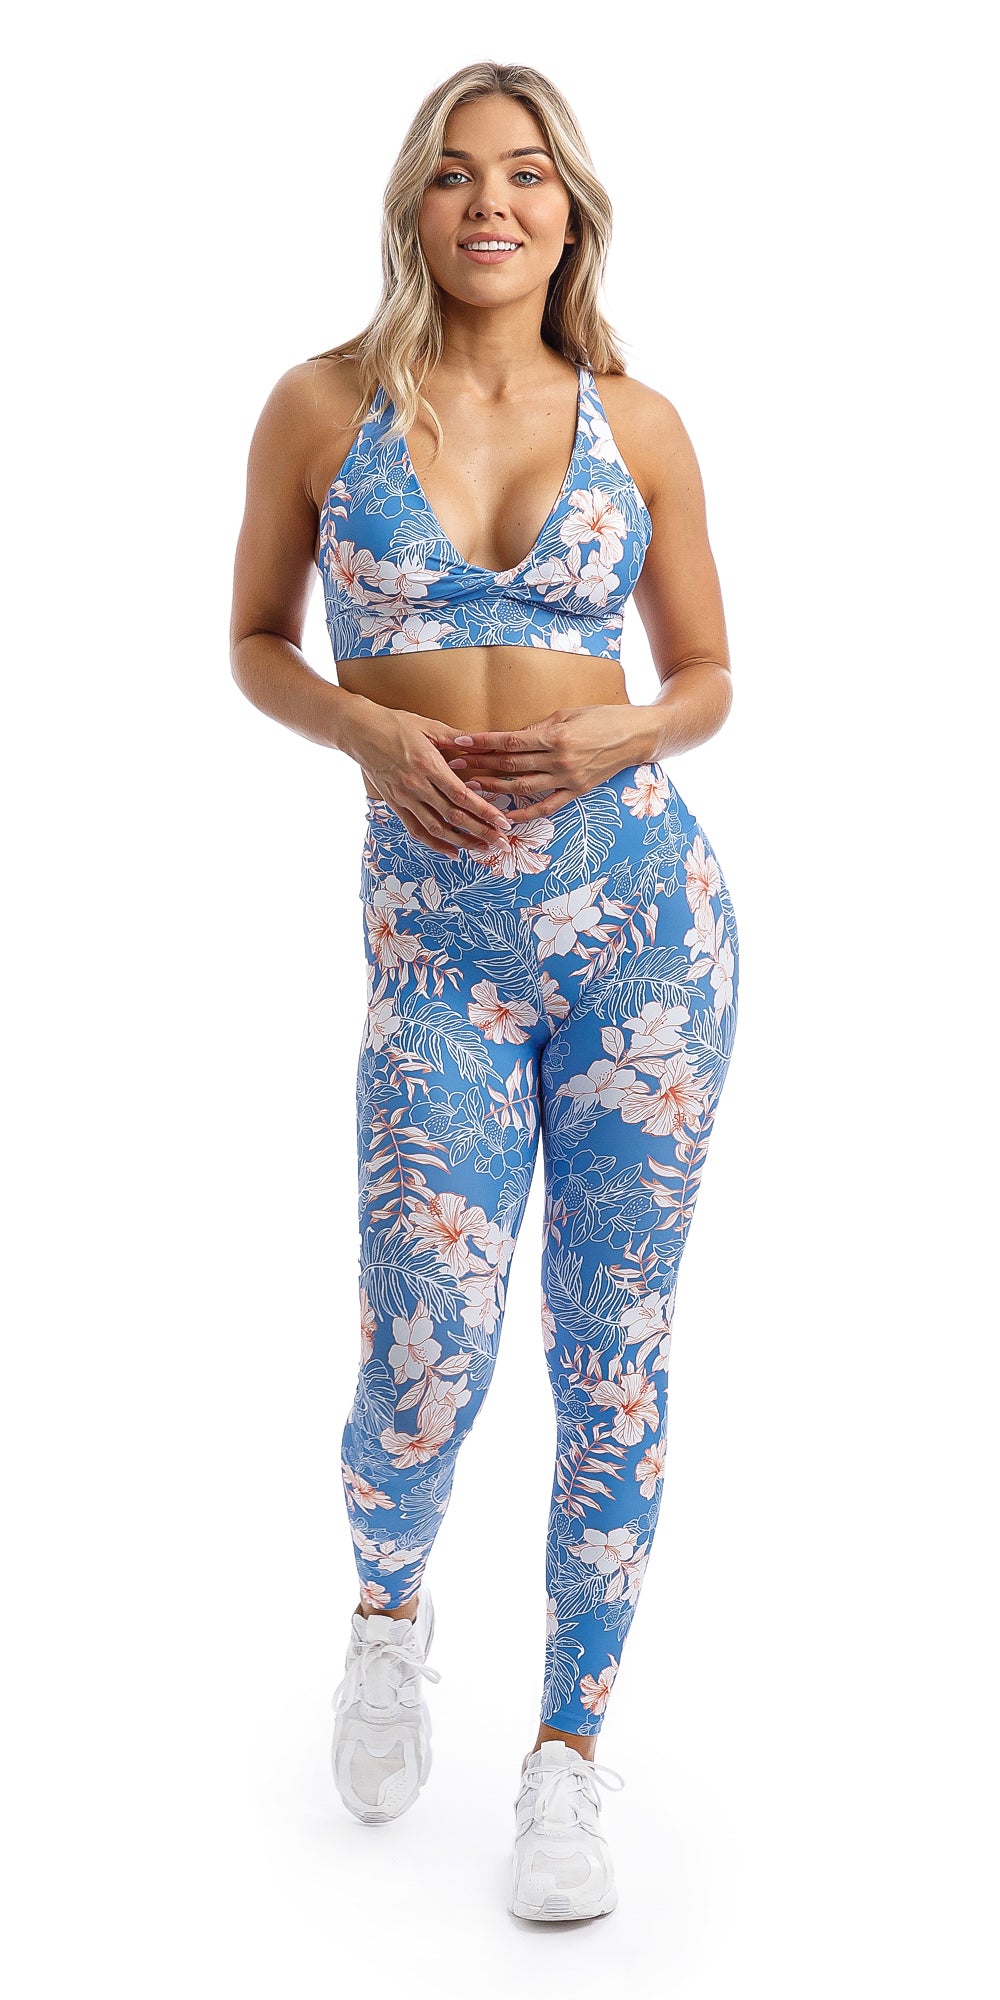 Lady wearing blue, white, pink floral Hibiscus Kiss print ultra high waist leggings & matching infinity bra